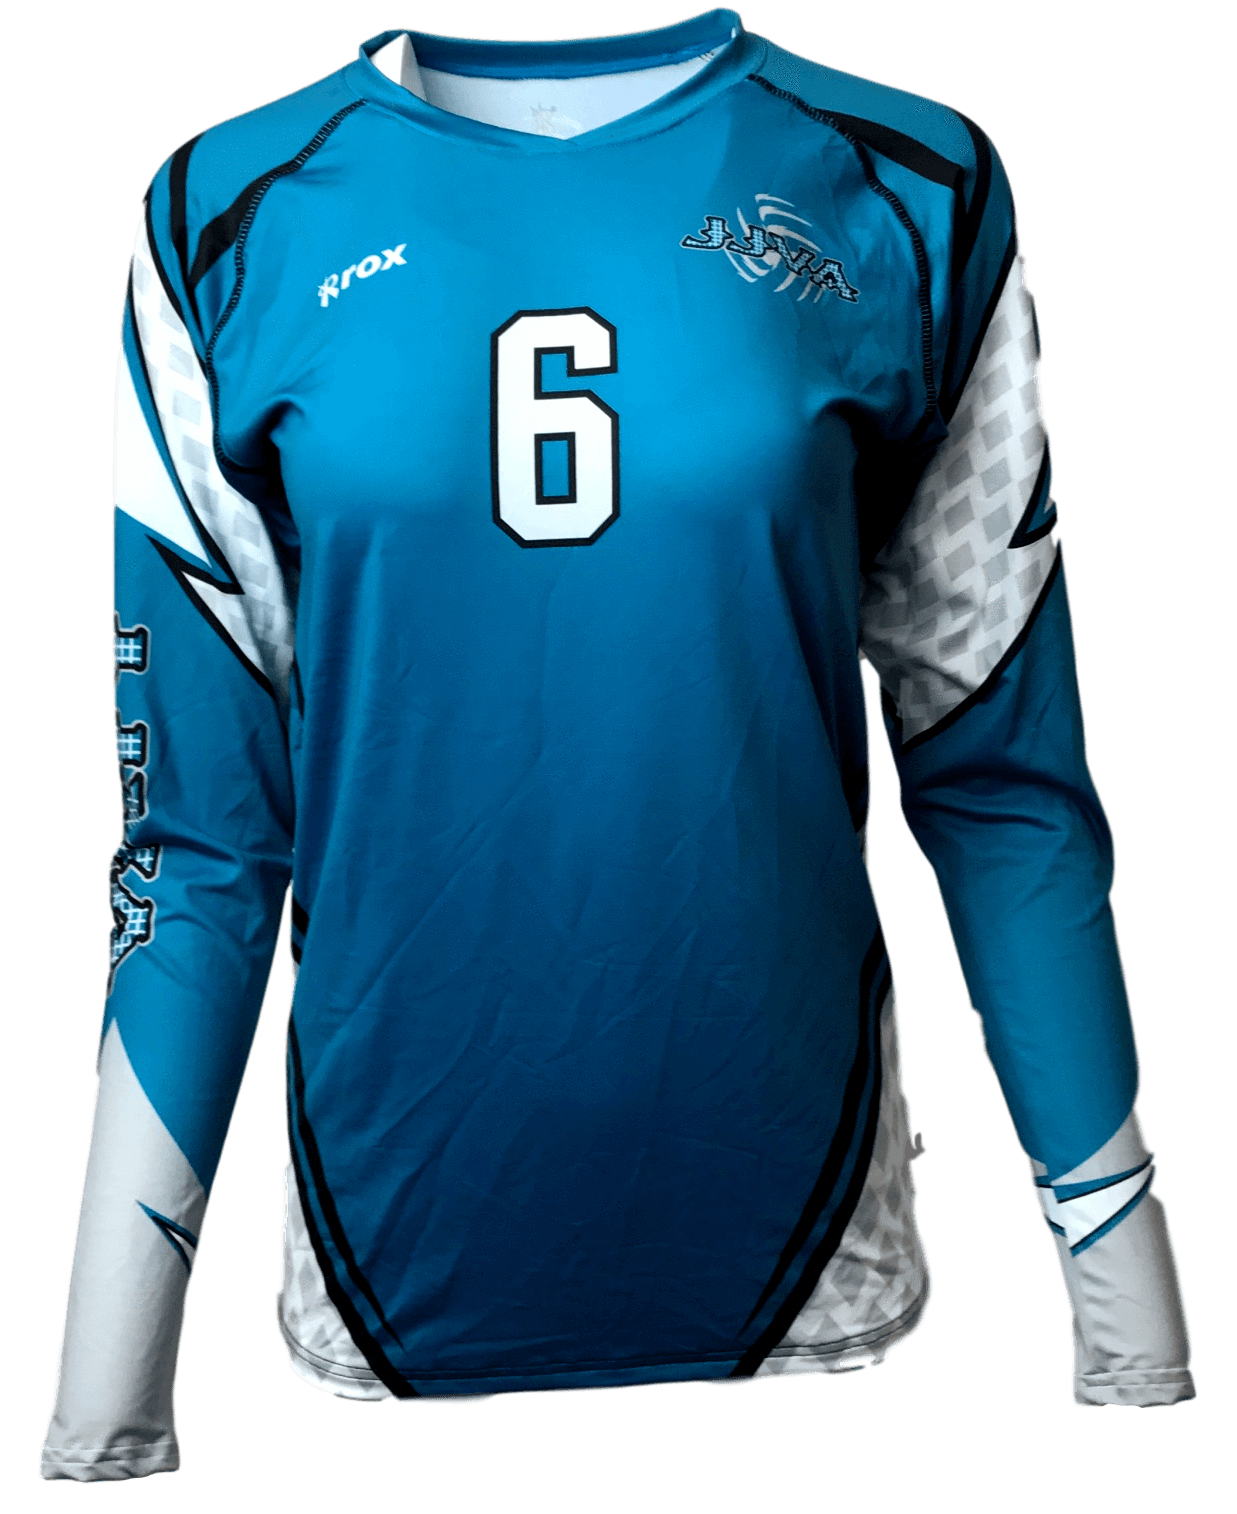 Diamond Sublimated Volleyball Jersey,Custom - Rox Volleyball